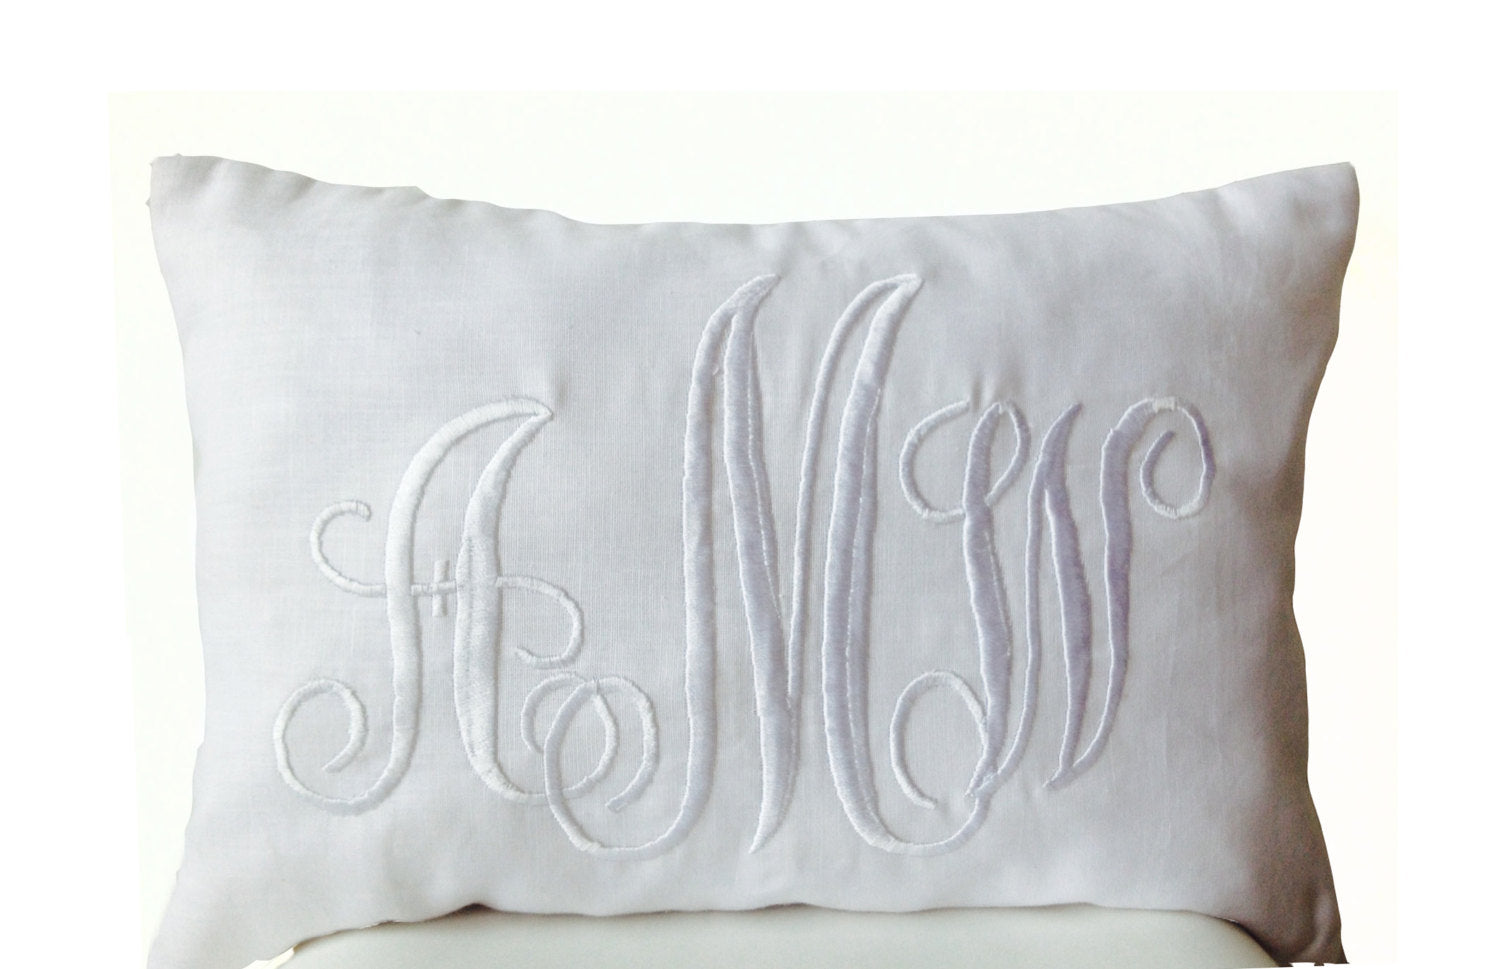 Monogram Pillow Cover